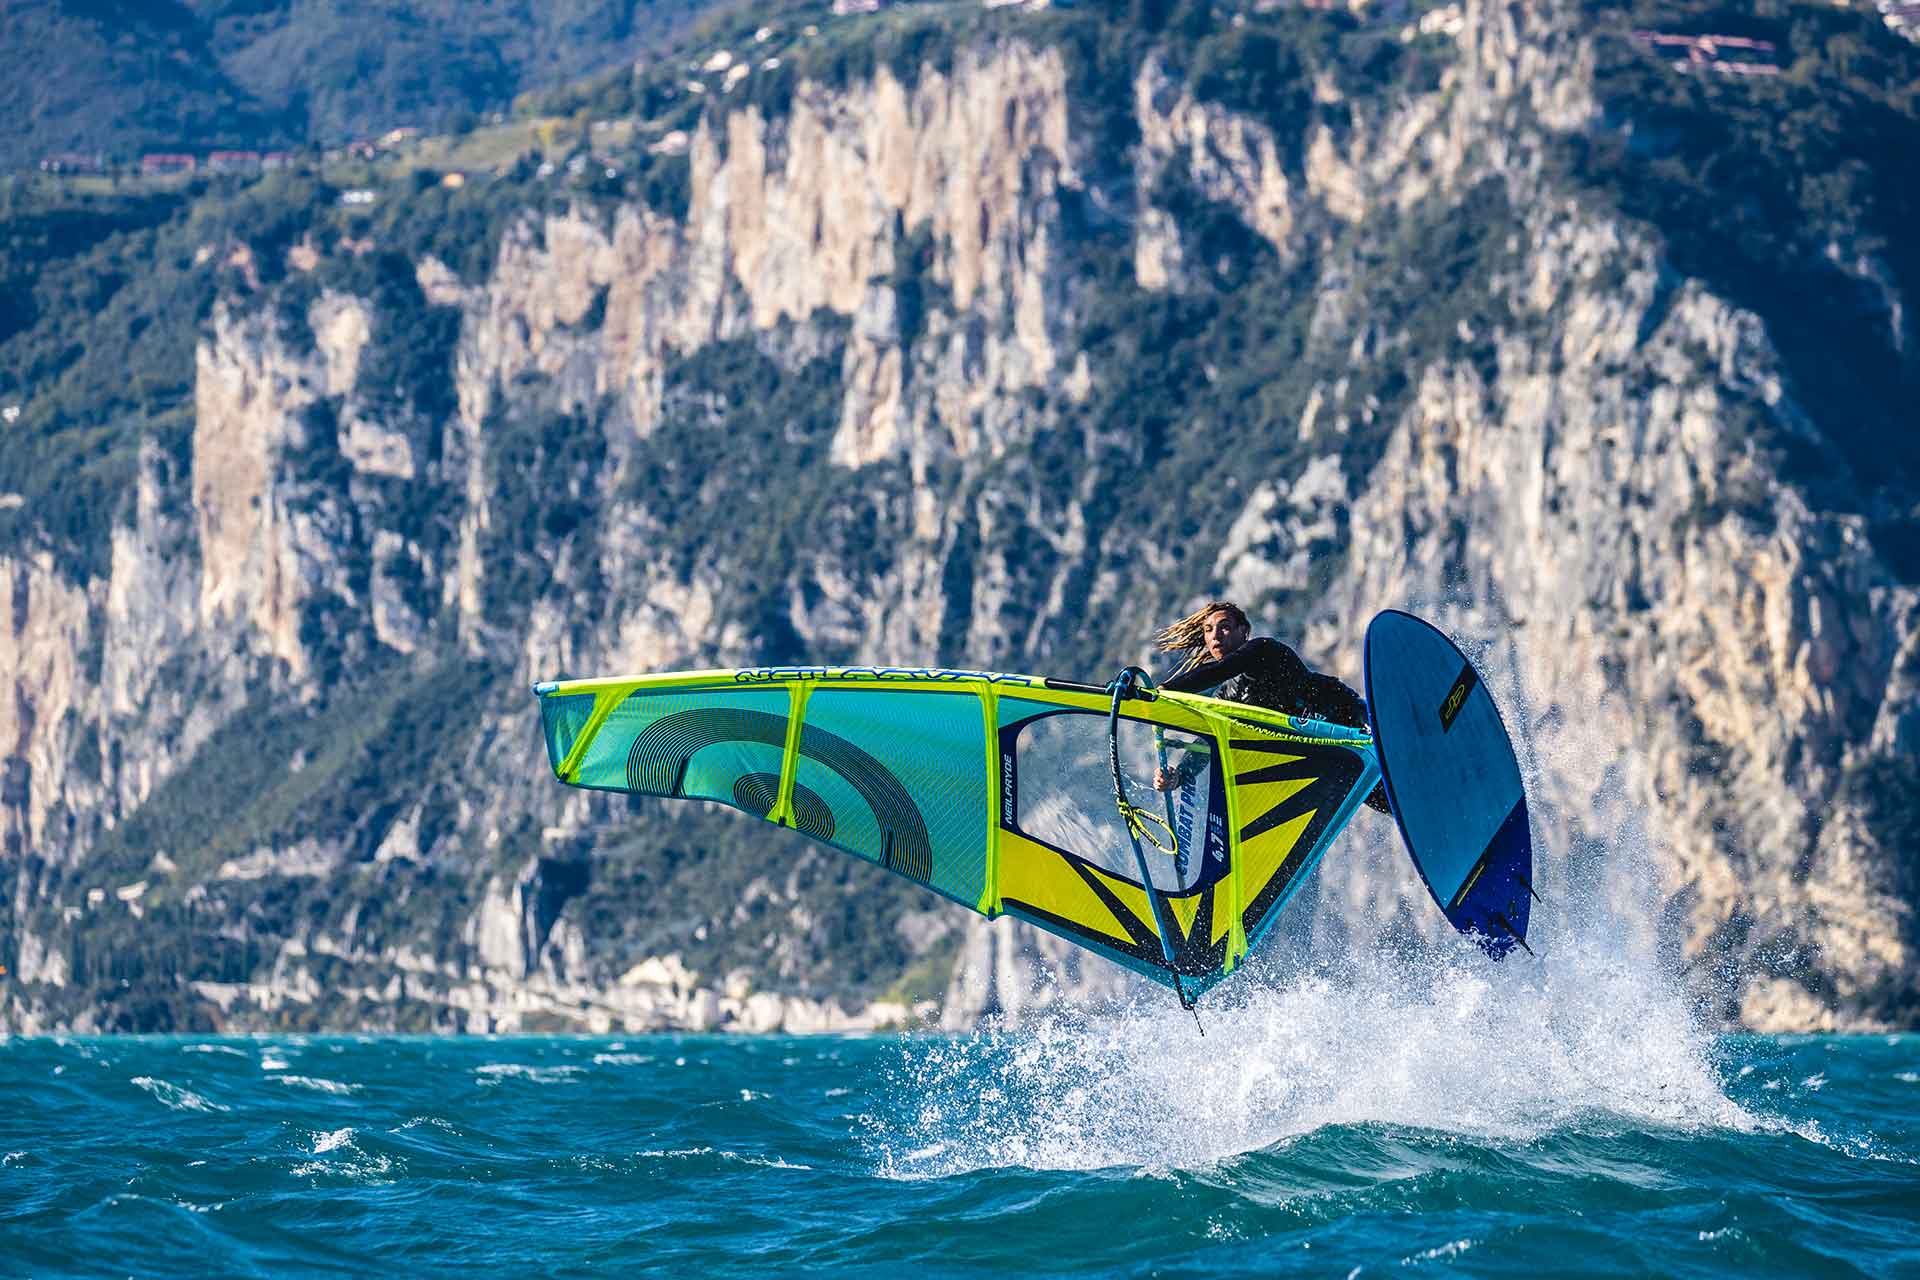 magic wave jp australie windsurfing karlin 2021 obrazek wave woow